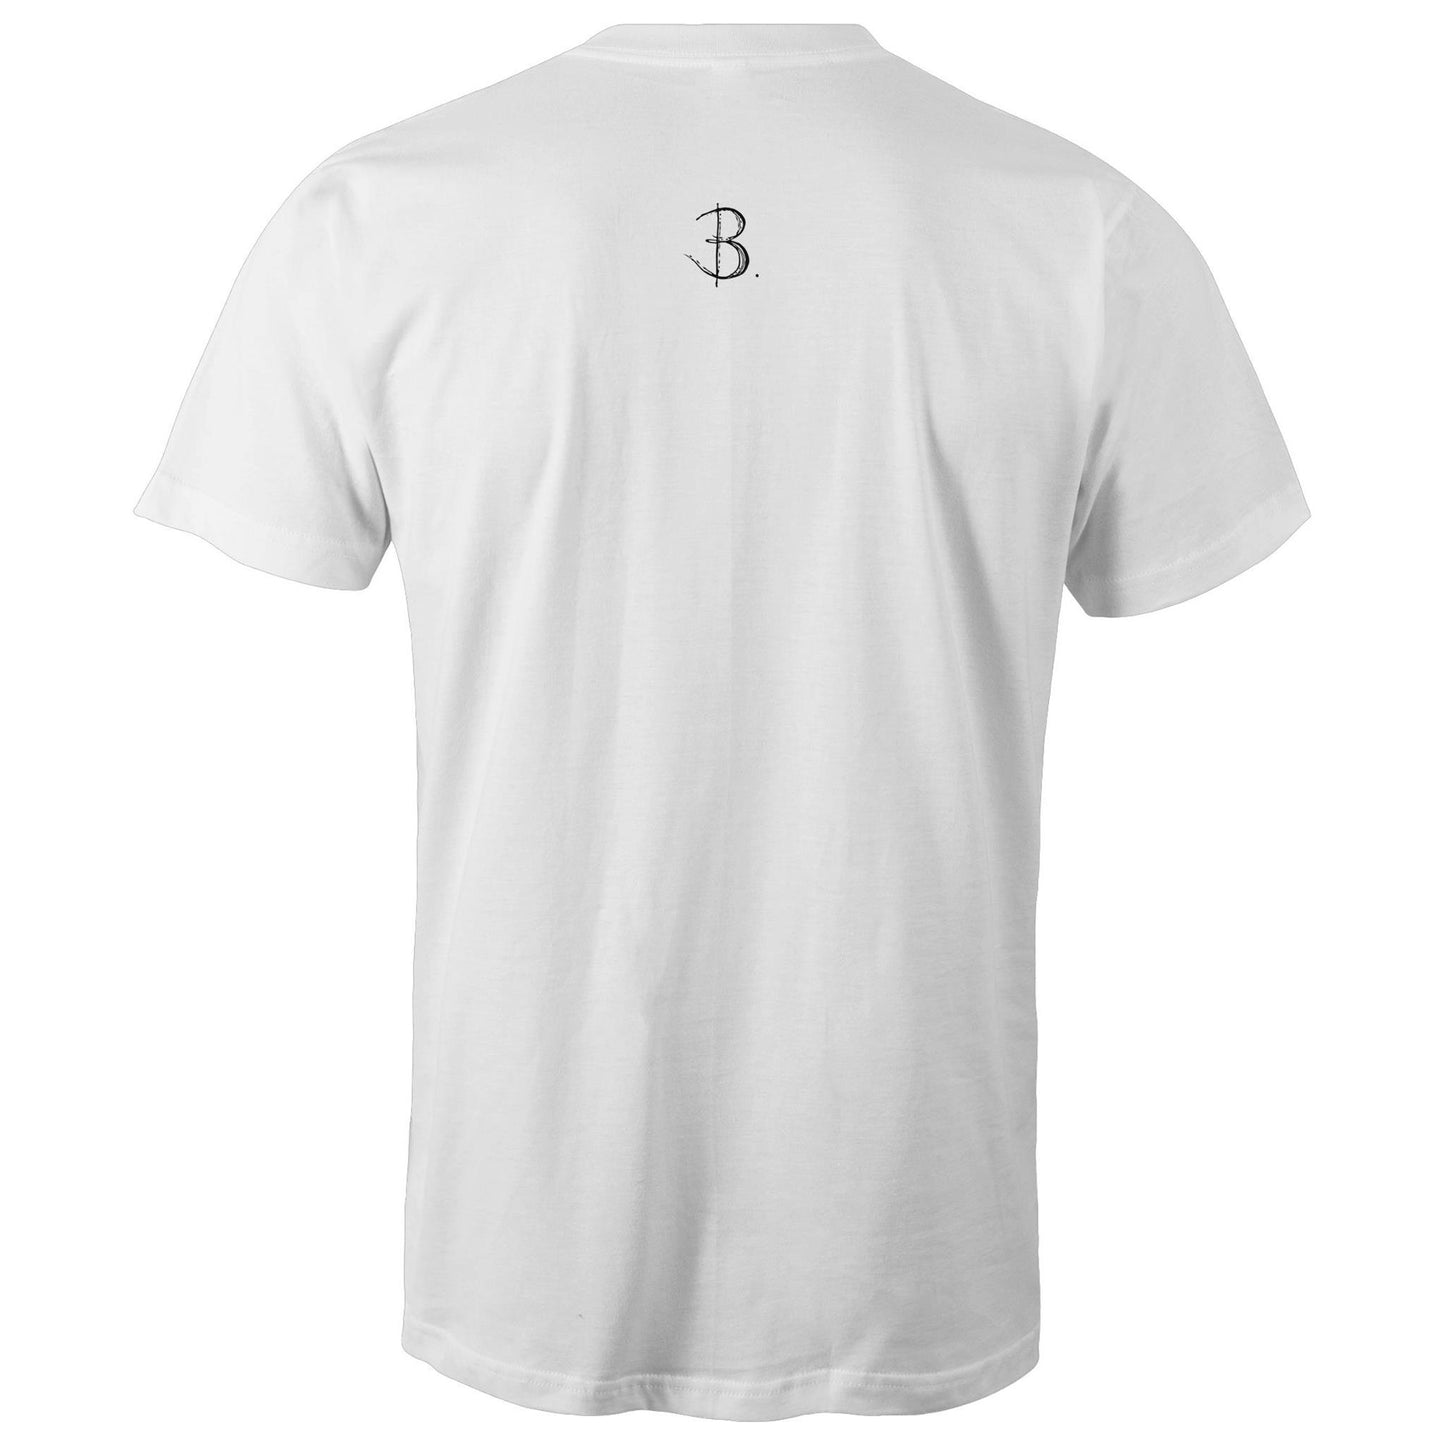 'OFF GRID' Luxury White Mens or Unisex Premium Quality T-Shirt with 'B' Logo of Bridget Bradley, Abstract Artist and Designer. Designed by Bridget Bradley